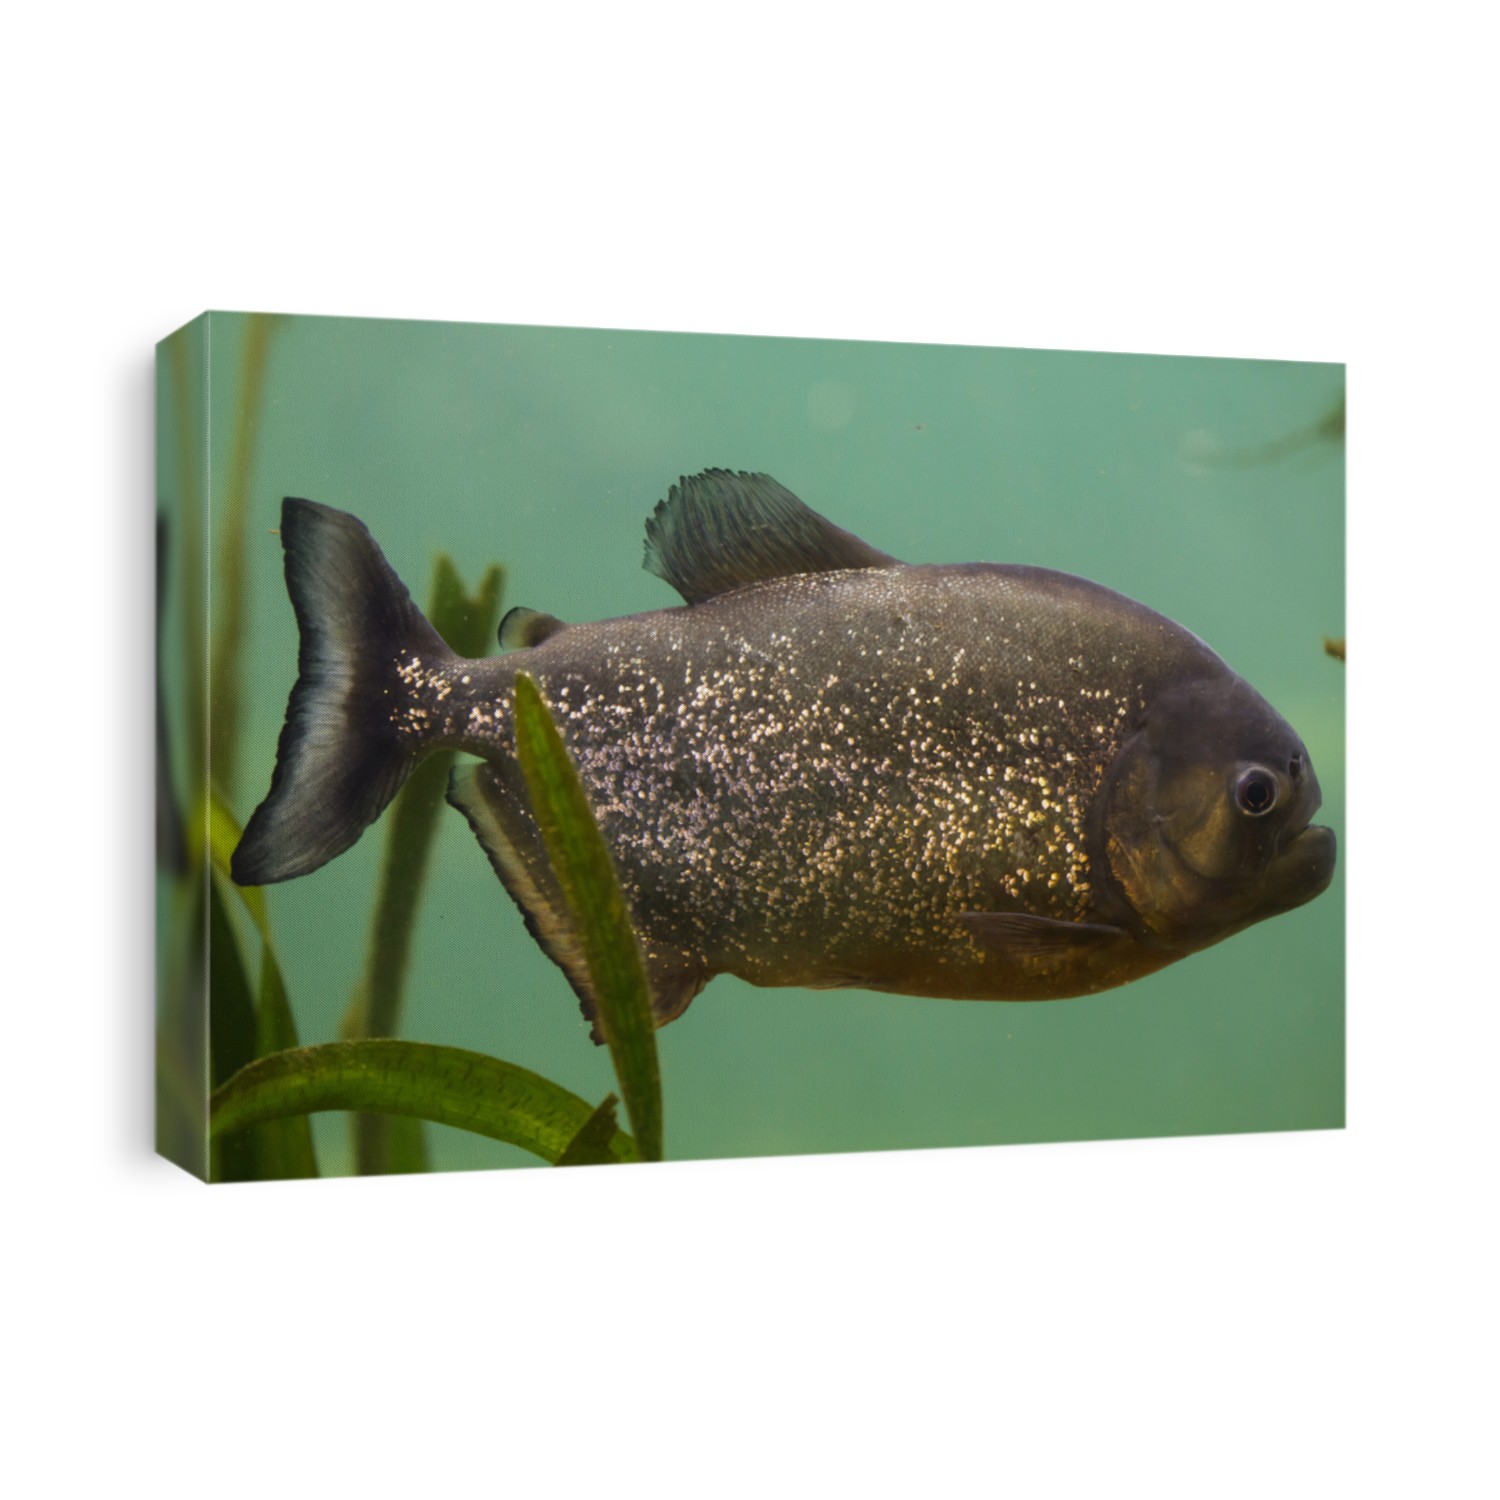 Red piranha (Pygocentrus nattereri), also known as the red-bellied piranha.